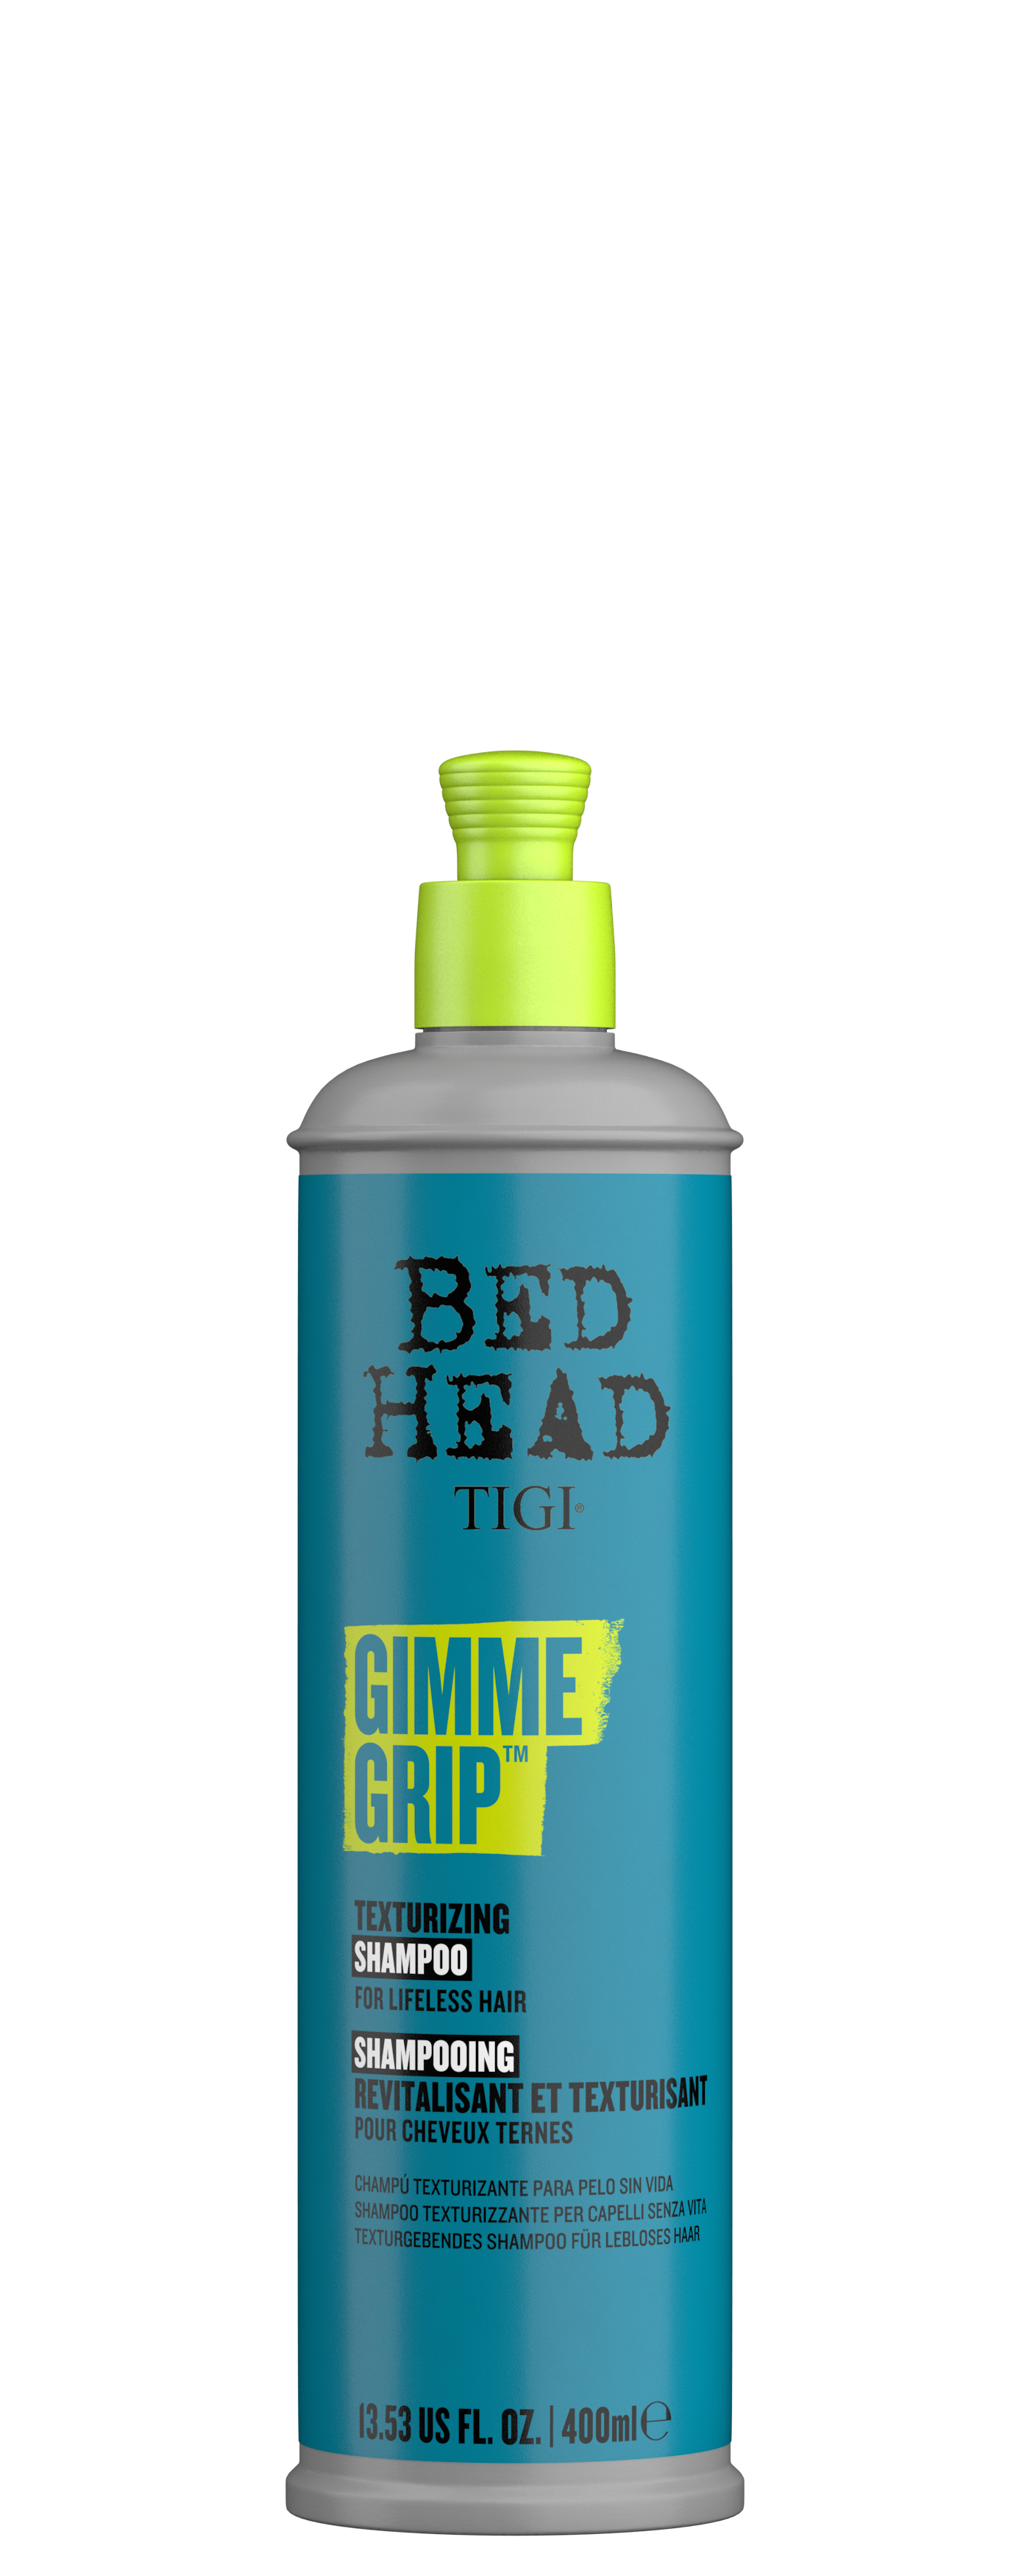 Шампуни для волос:  TIGI -  Текстурирующий шампунь GIMME GRIP BED HEAD (400 мл)